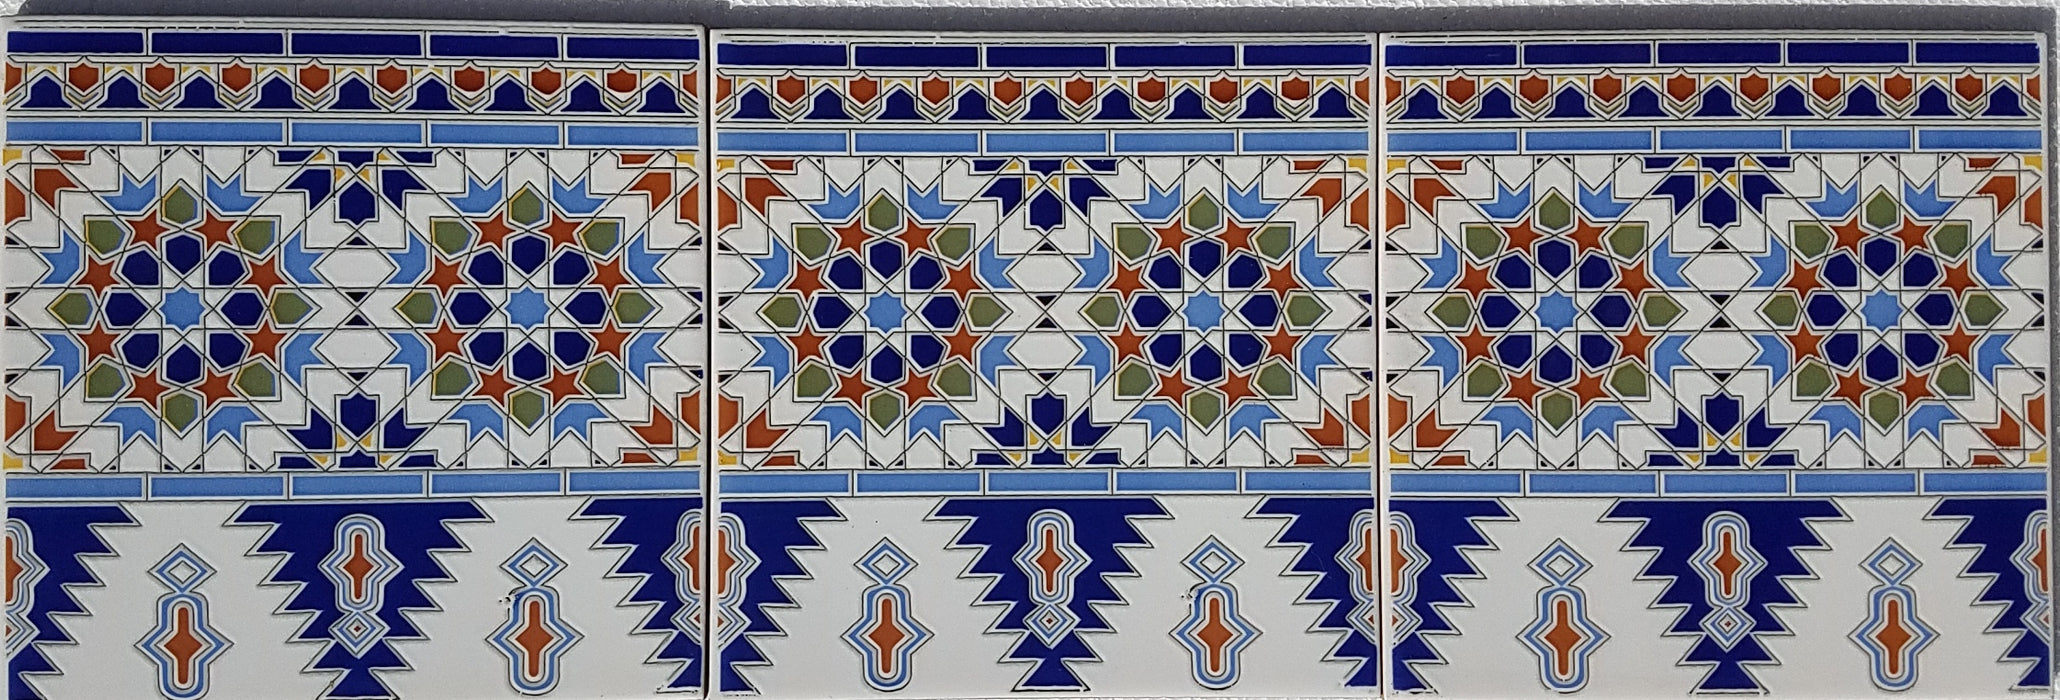 Moroccan border tile